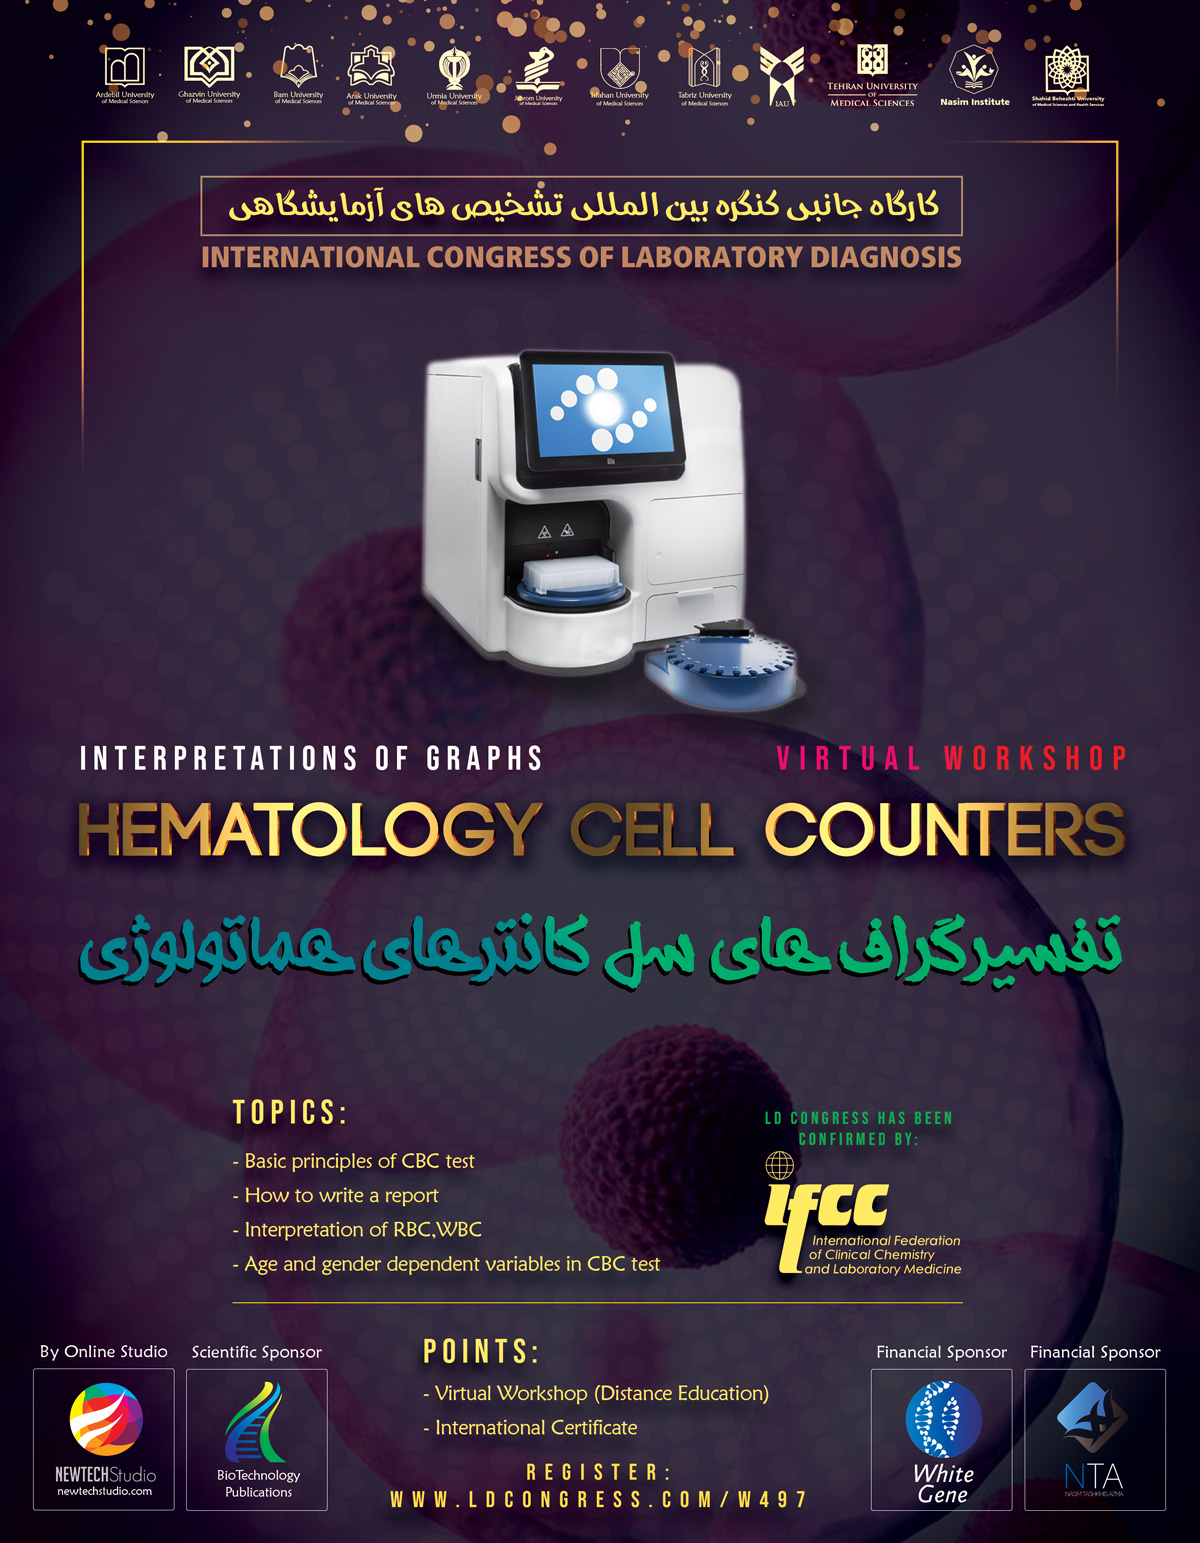 Interpretation of hematological cell counter graphs